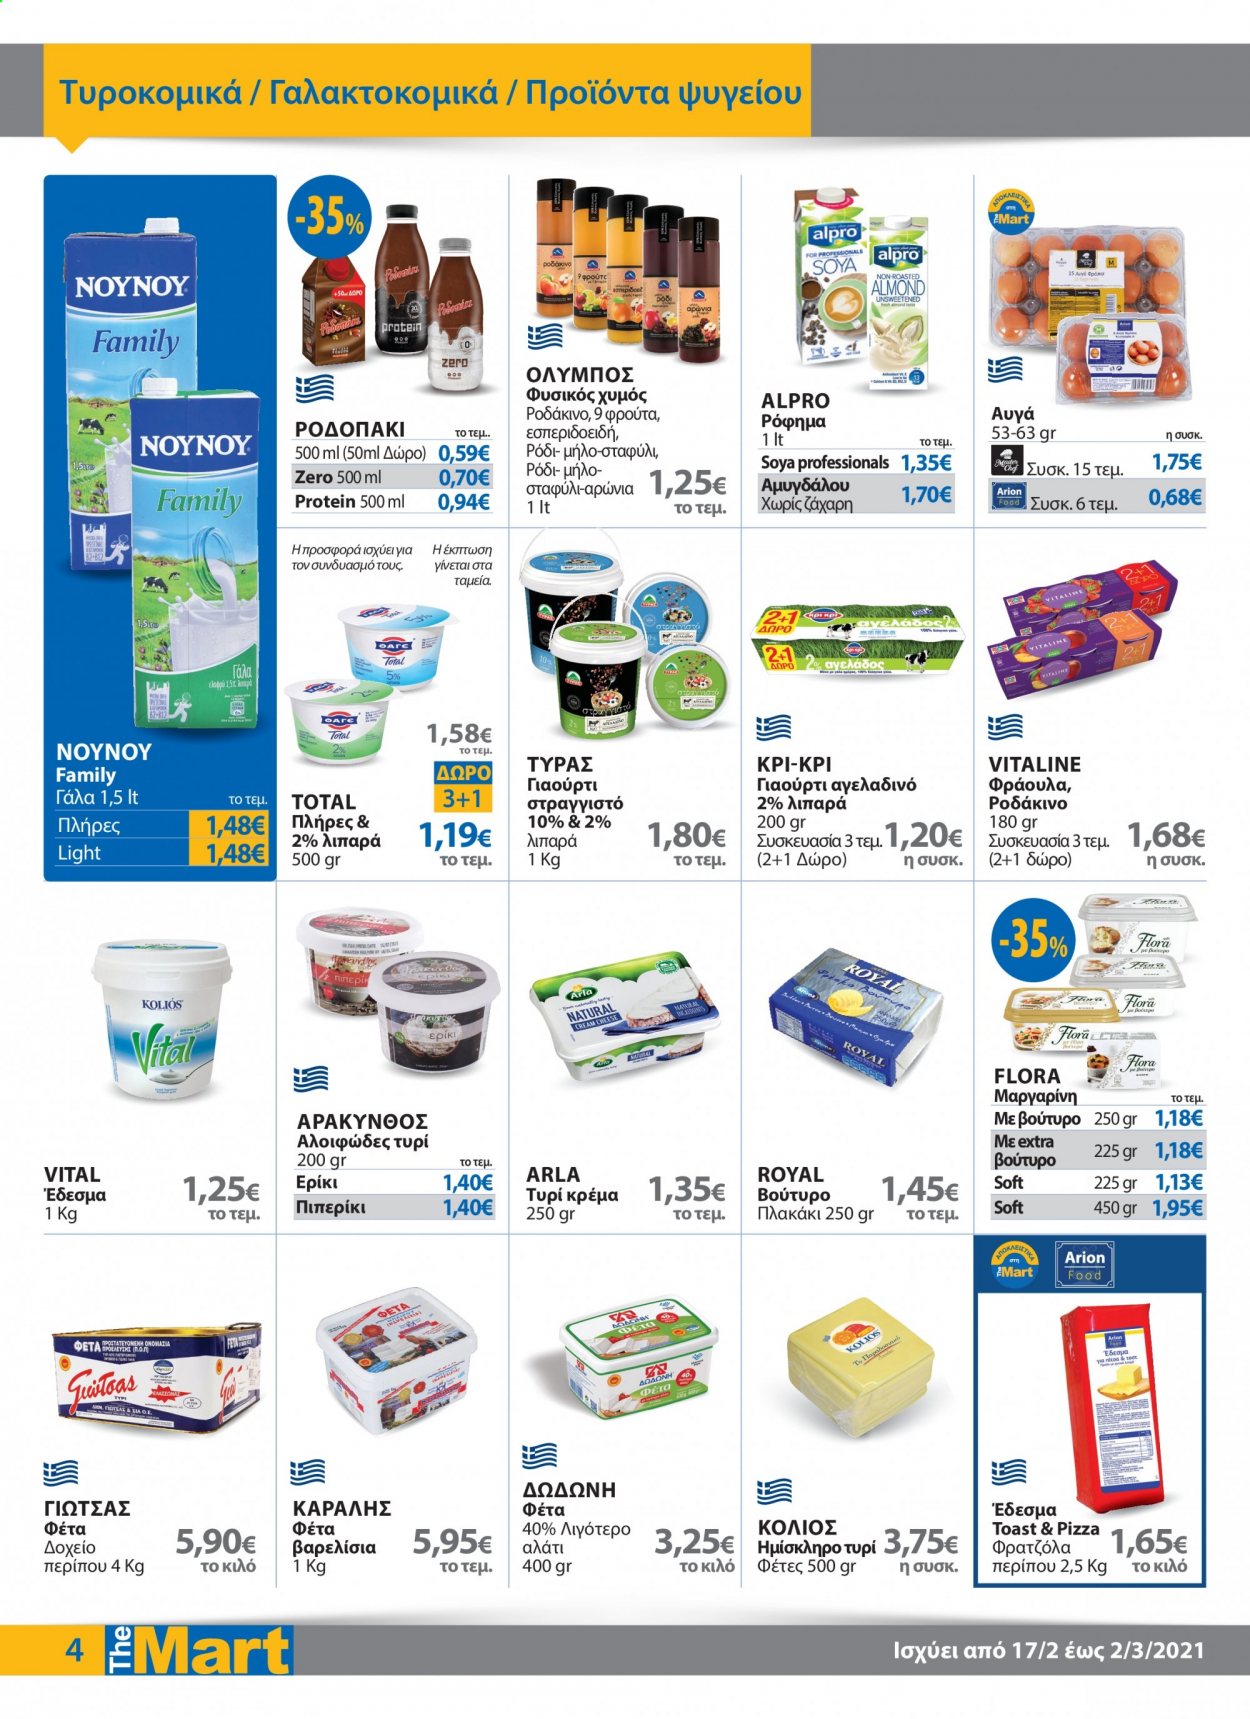 thumbnail - Φυλλάδια The Mart - 17.02.2021 - 02.03.2021 - Εκπτωτικά προϊόντα - τυρί κρέμα, γιαούρτι, γάλα, αυγά, Flora, βούτυρο, μαργαρίνη, ζάχαρη. Σελίδα 4.